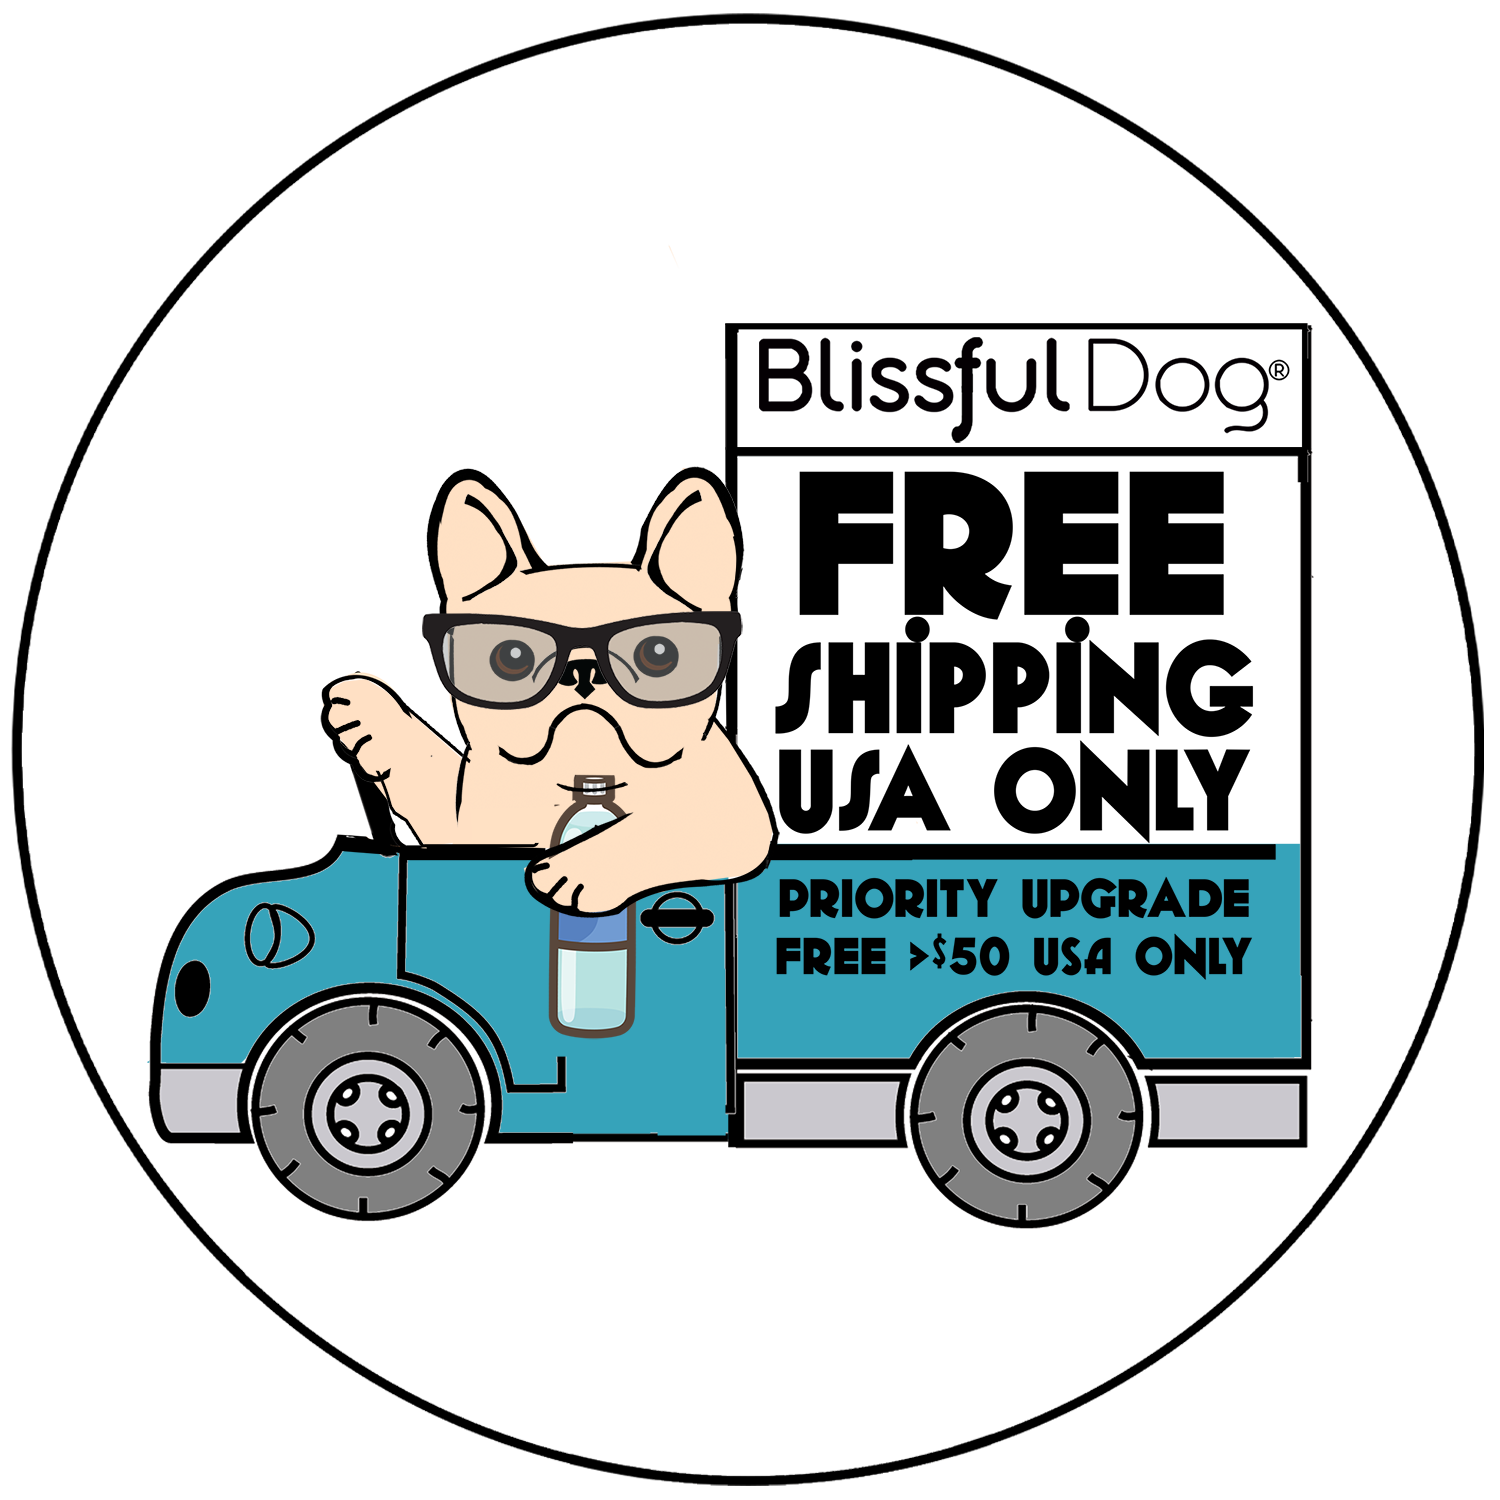 blissful dog free shipping